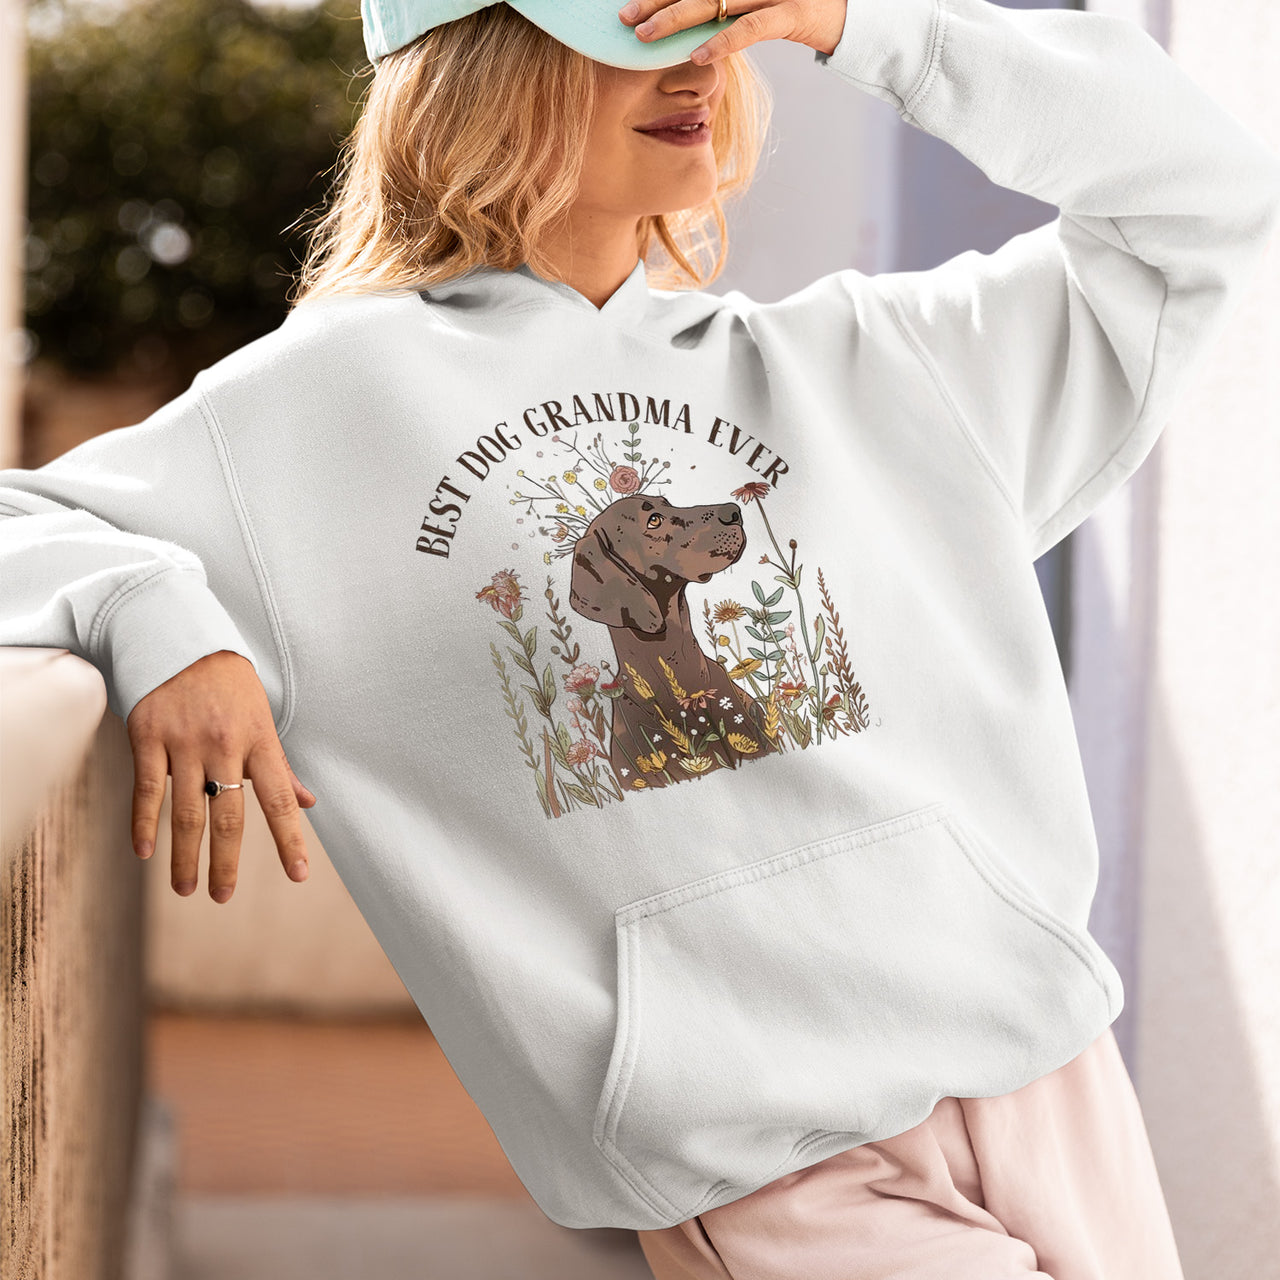 Labrador Retriever Dog T-shirt, Pet Lover Shirt, Dog Lover Shirt, Best Dog Grandma Ever T-Shirt, Dog Owner Shirt, Gift For Dog Grandma, Funny Dog Shirts, Women Dog T-Shirt, Mother's Day Gift, Dog Lover Wife Gifts, Dog Shirt